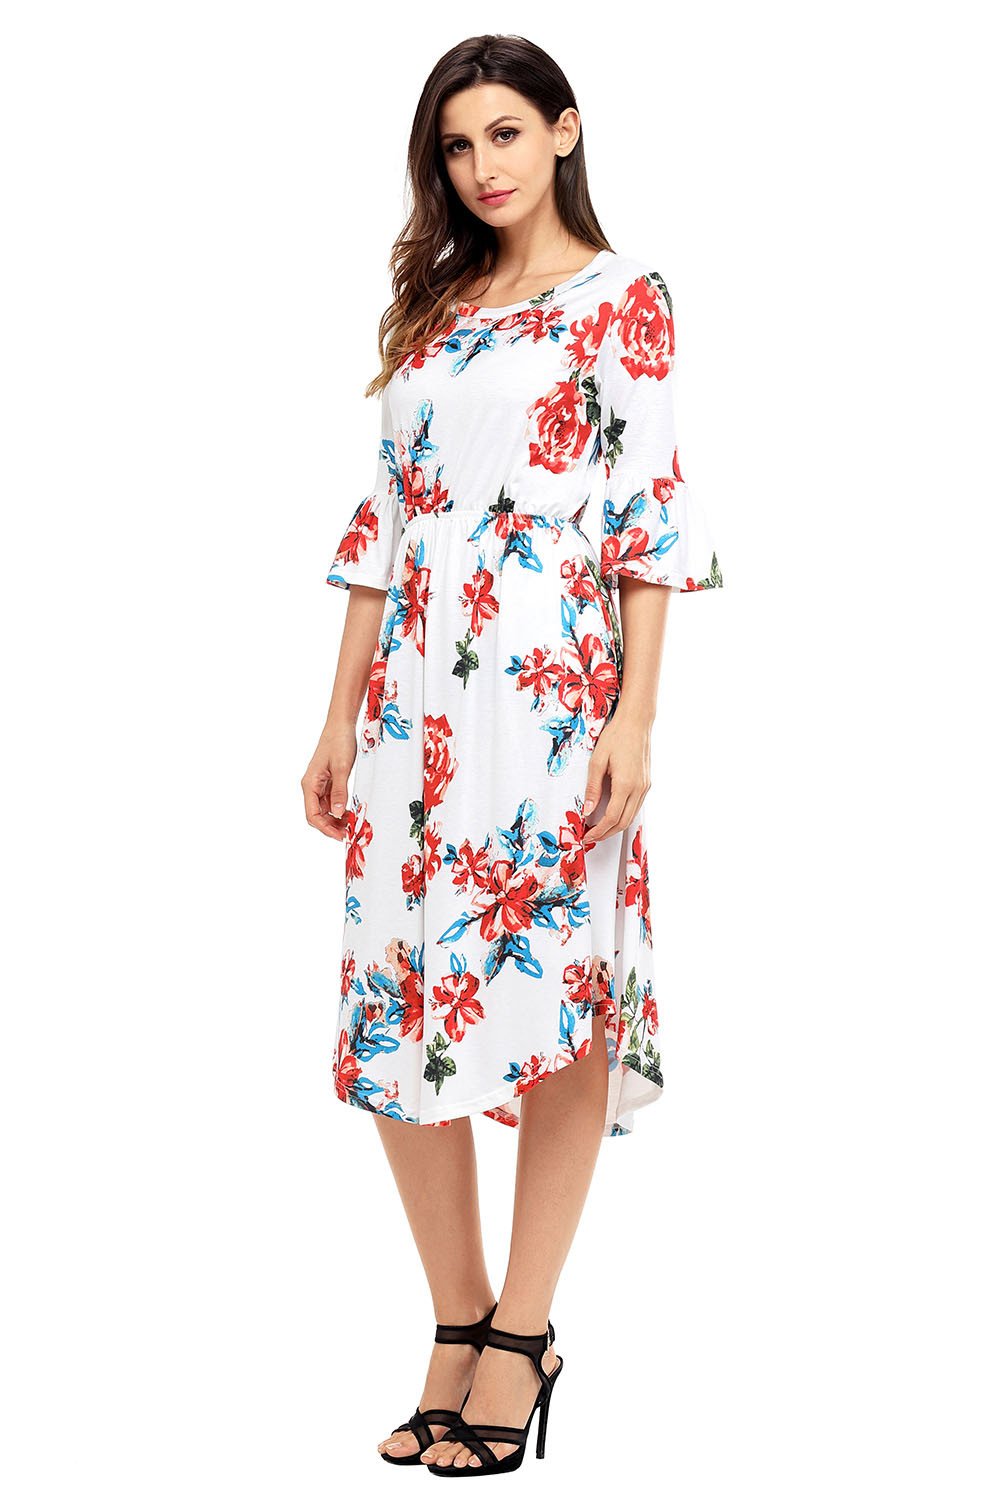 Find Me Floral Print Bell Sleeve Midi Dress